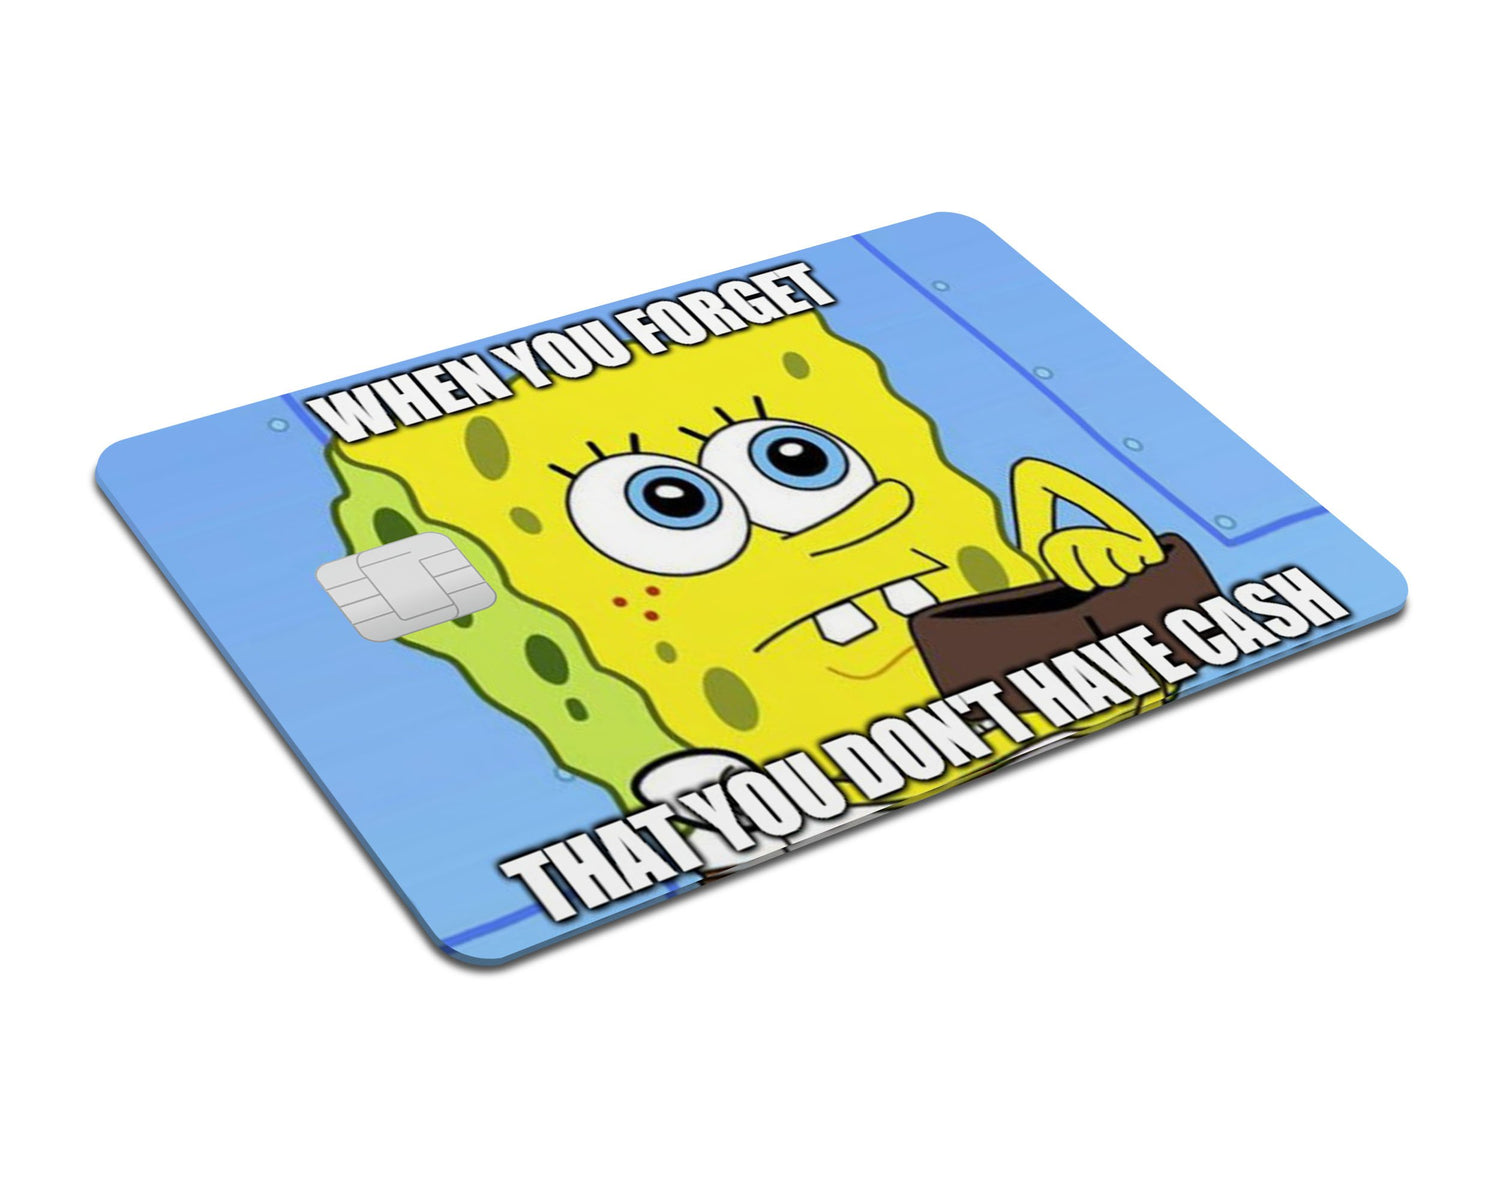 Spongebob Wallet Credit Card & Debit Card Skin